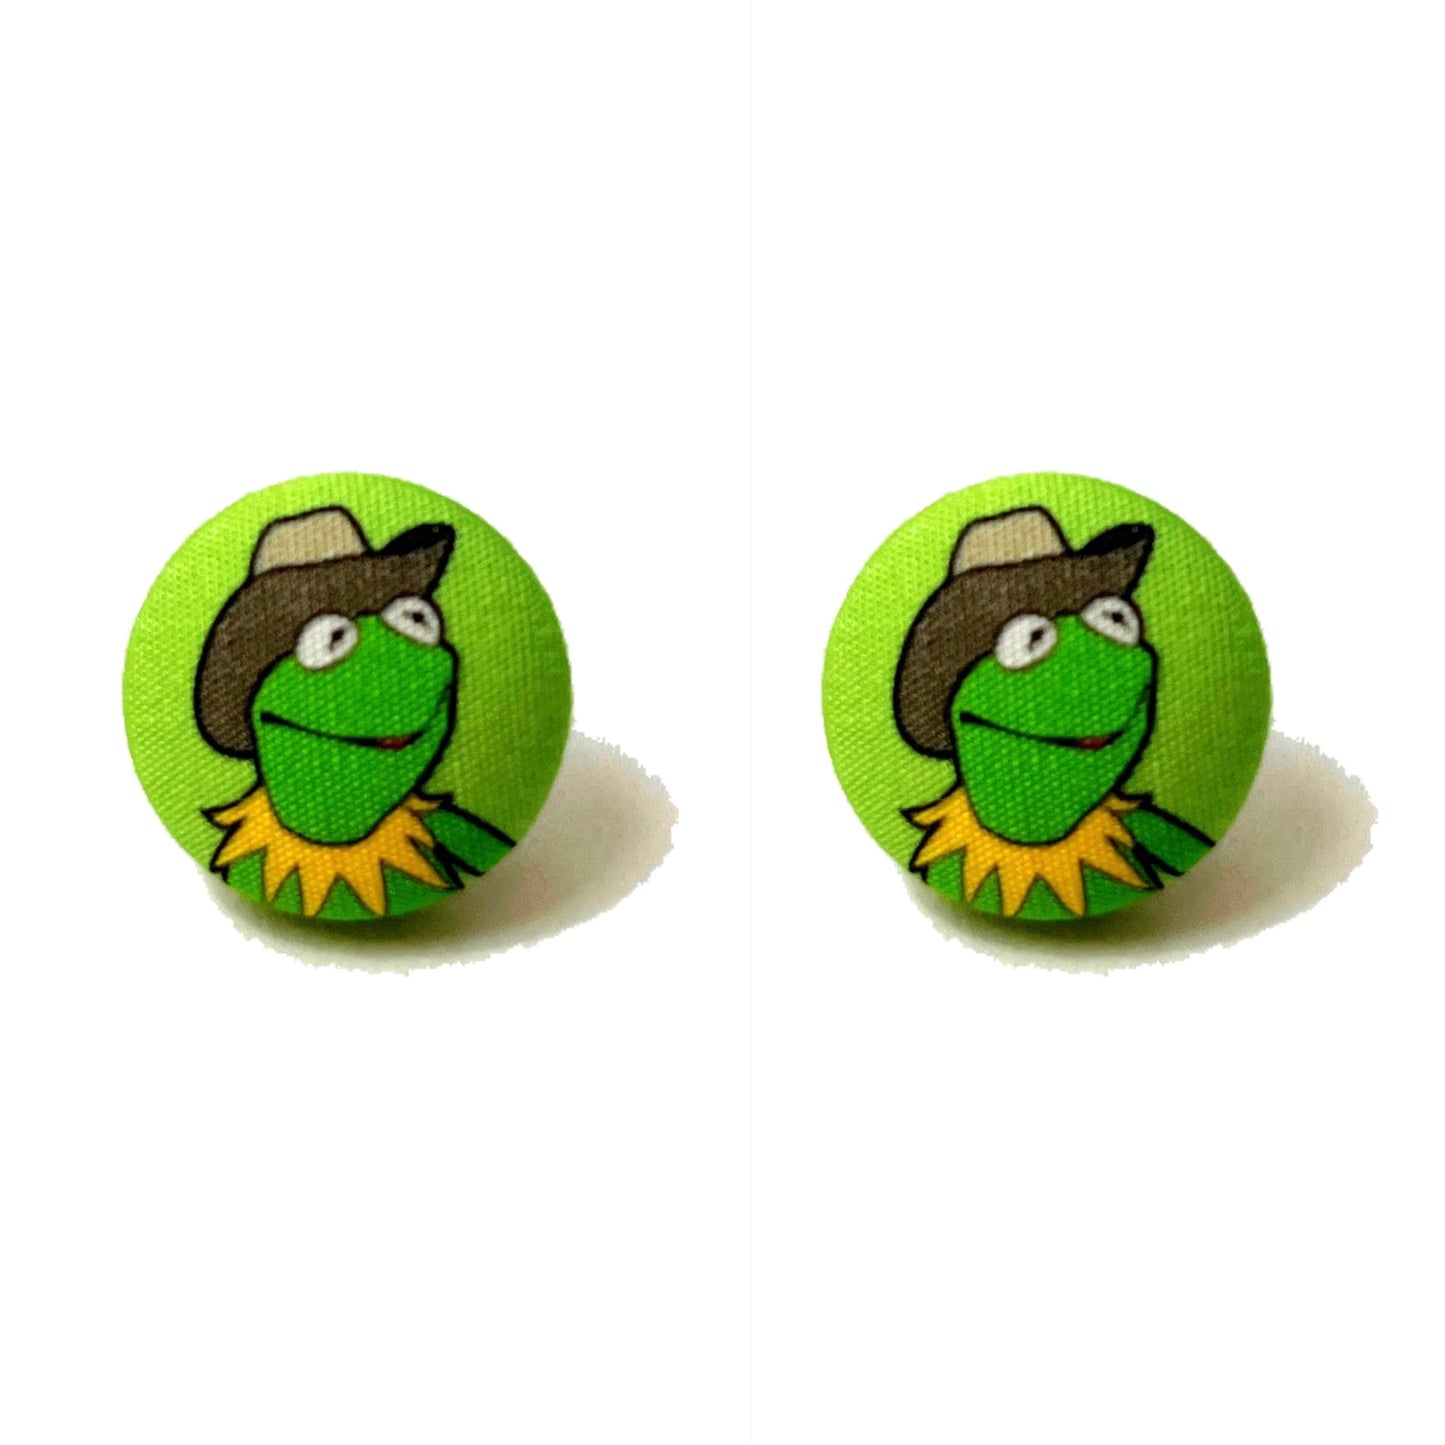 Cowboy Kermit Fabric Button Earrings